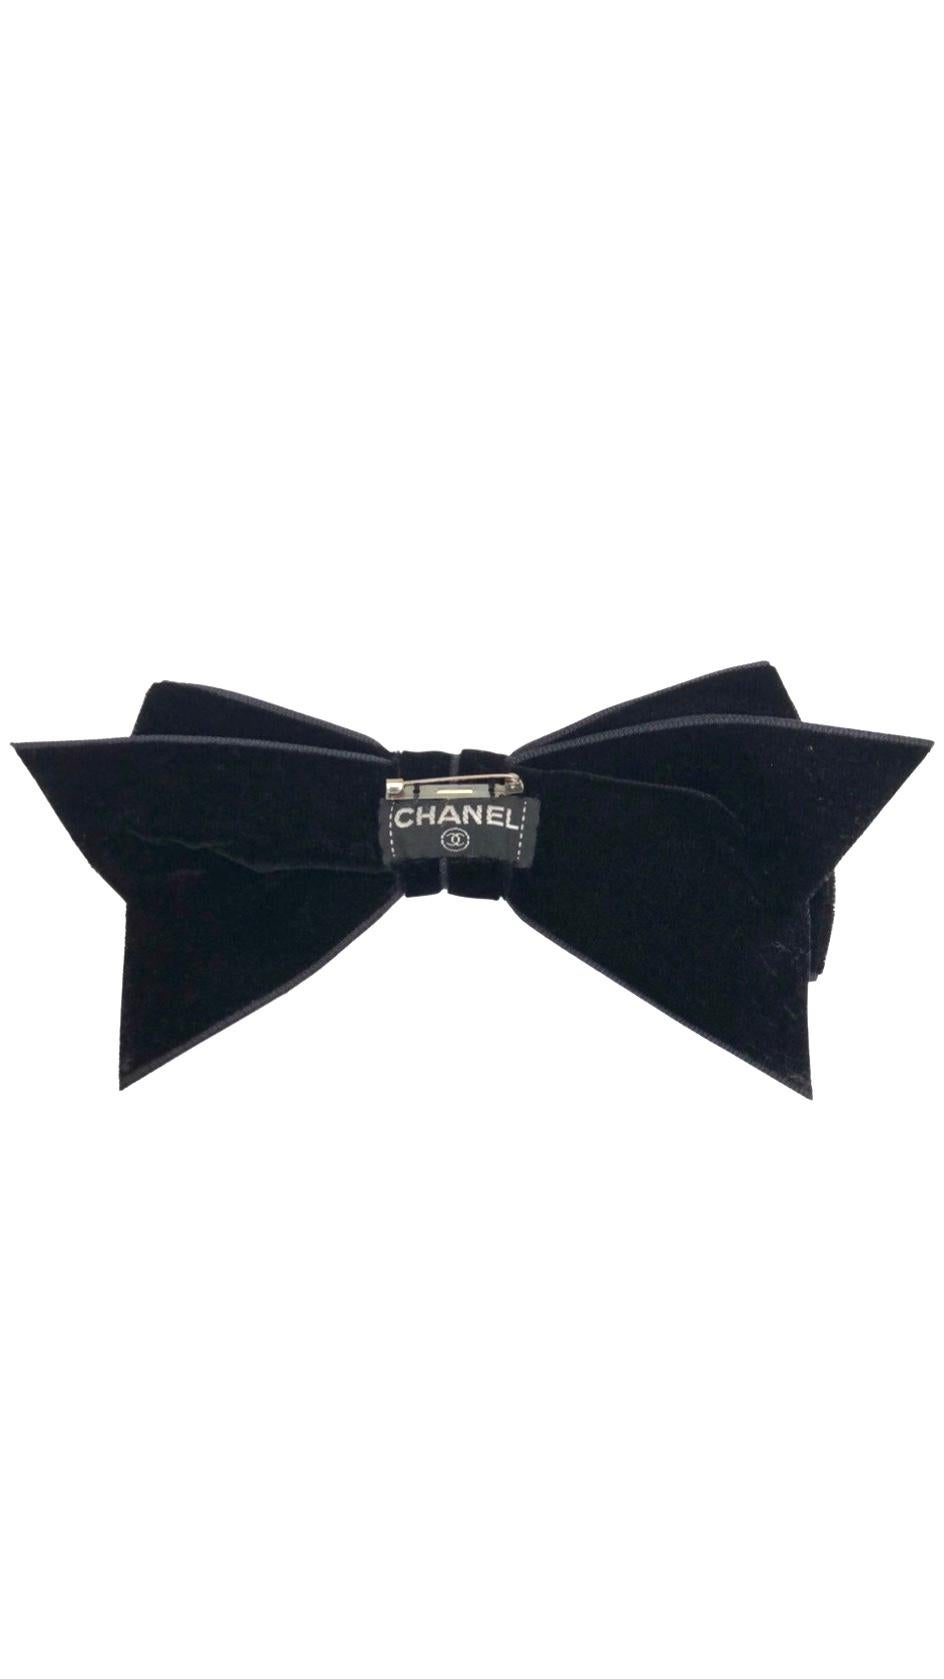 chanel bow tie